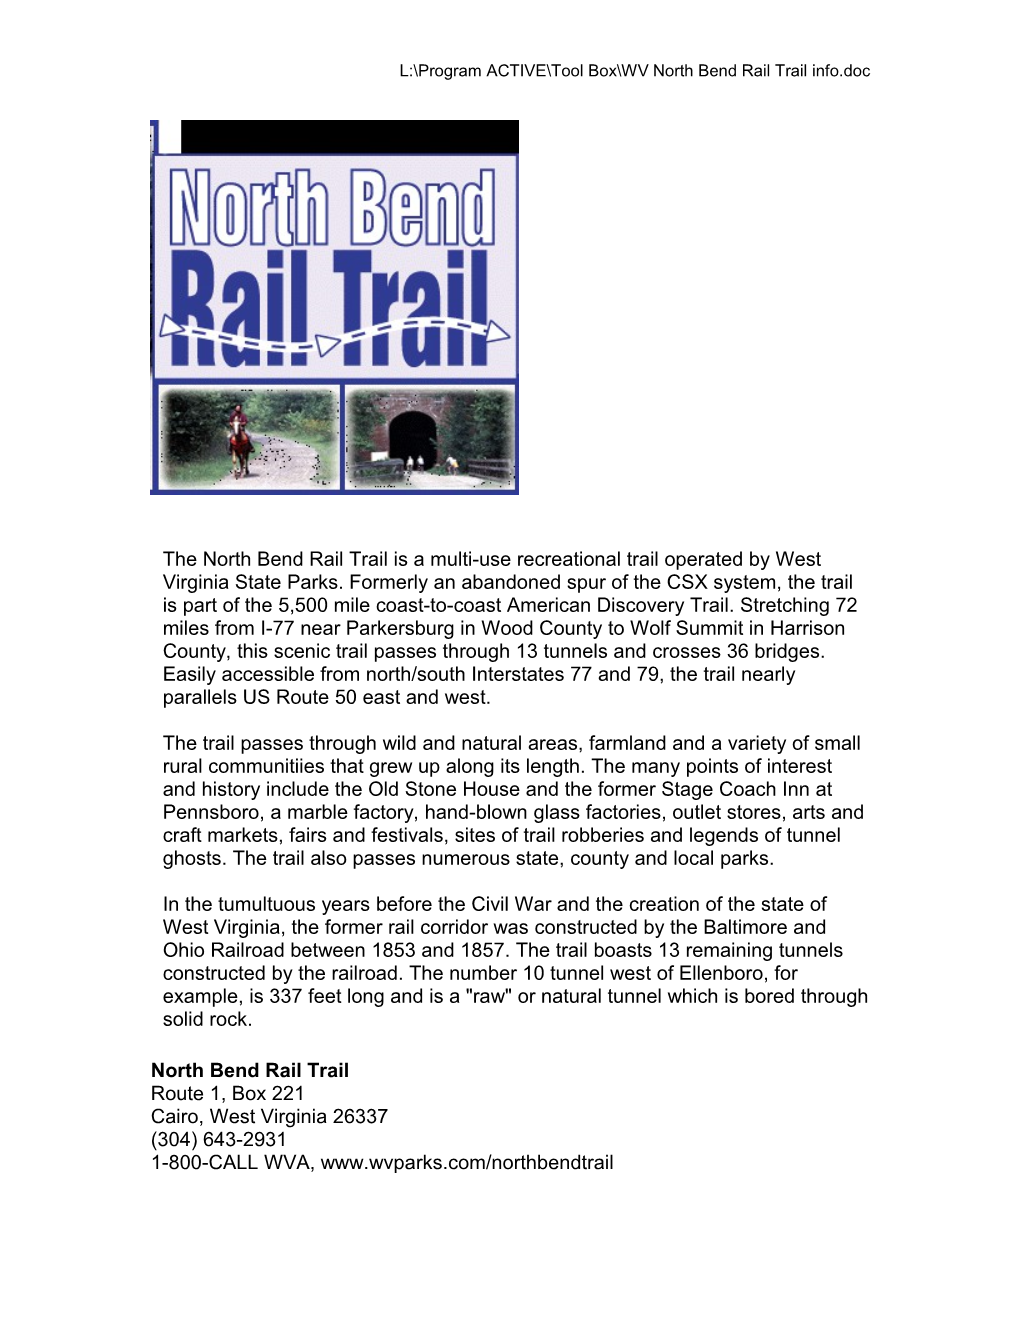 North Bend Rail Trail Route 1, Box 221 Cairo, West Virginia 26337 (304) 643-2931 1-800-CALL